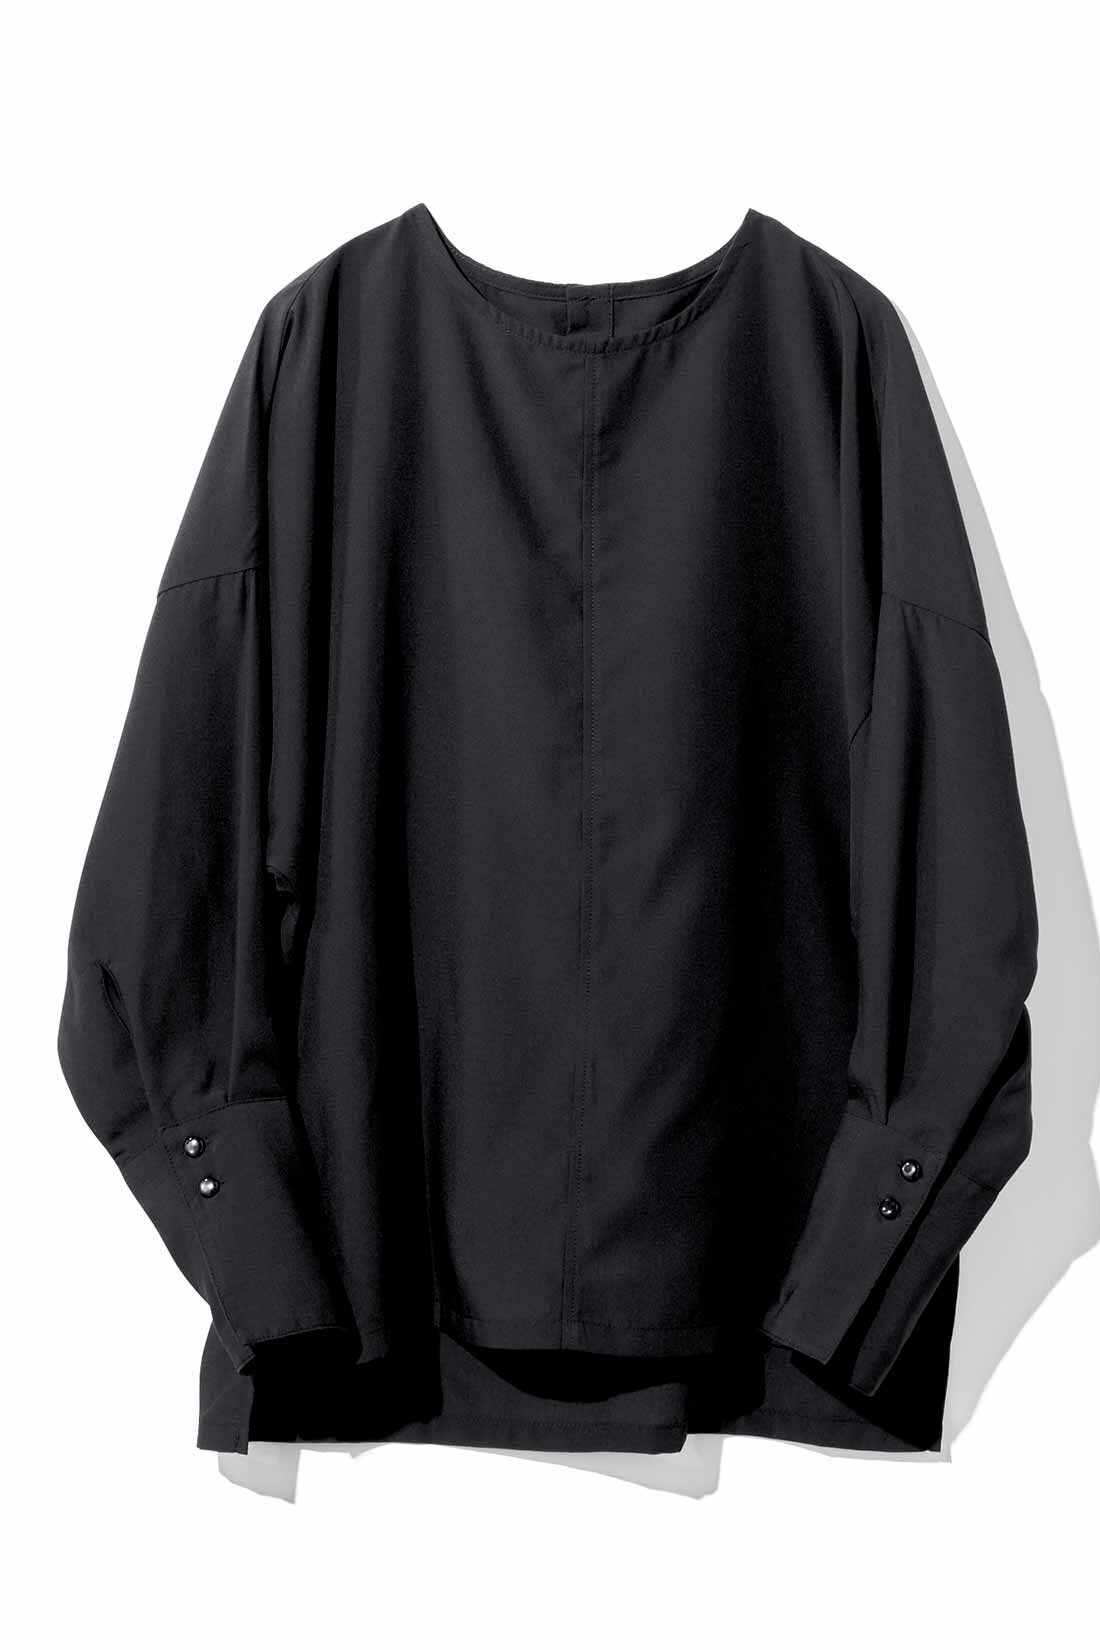 IEDIT|IEDIT[イディット]　ヴィンテージ風スパンローン素材のしわが気になりにくいシャツライクトップス〈ブラック〉|ブラック